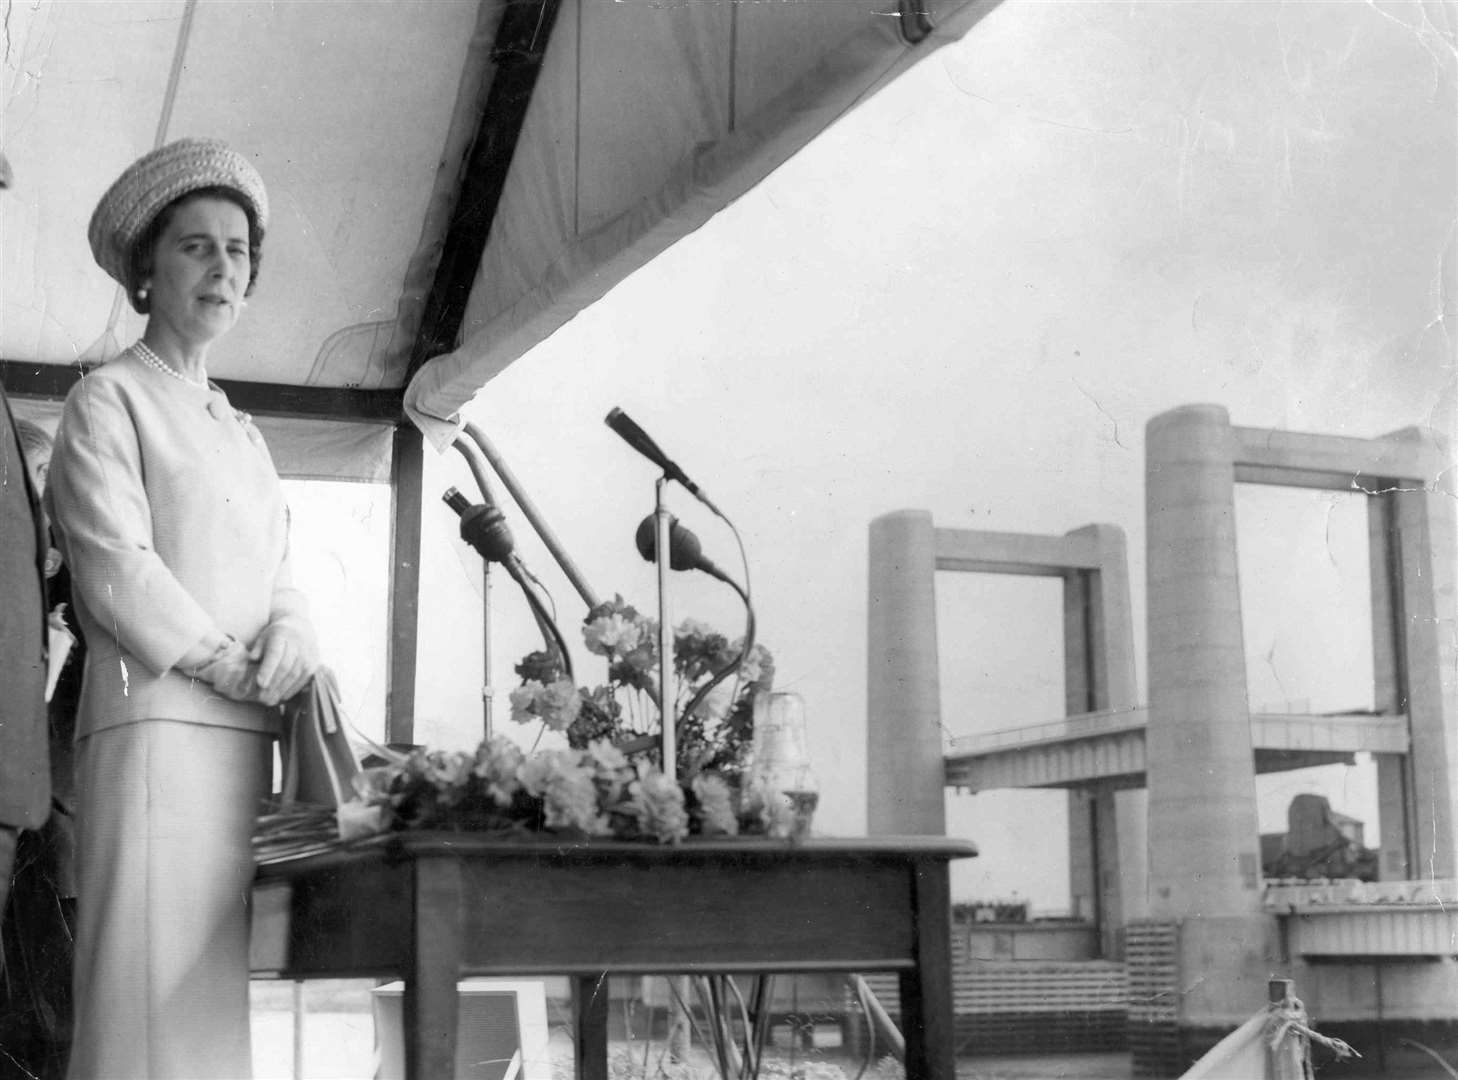 April 1960: Princess Marina, Duchess of Kent, opens the Kingsferry Bridge. It took 27 months to build